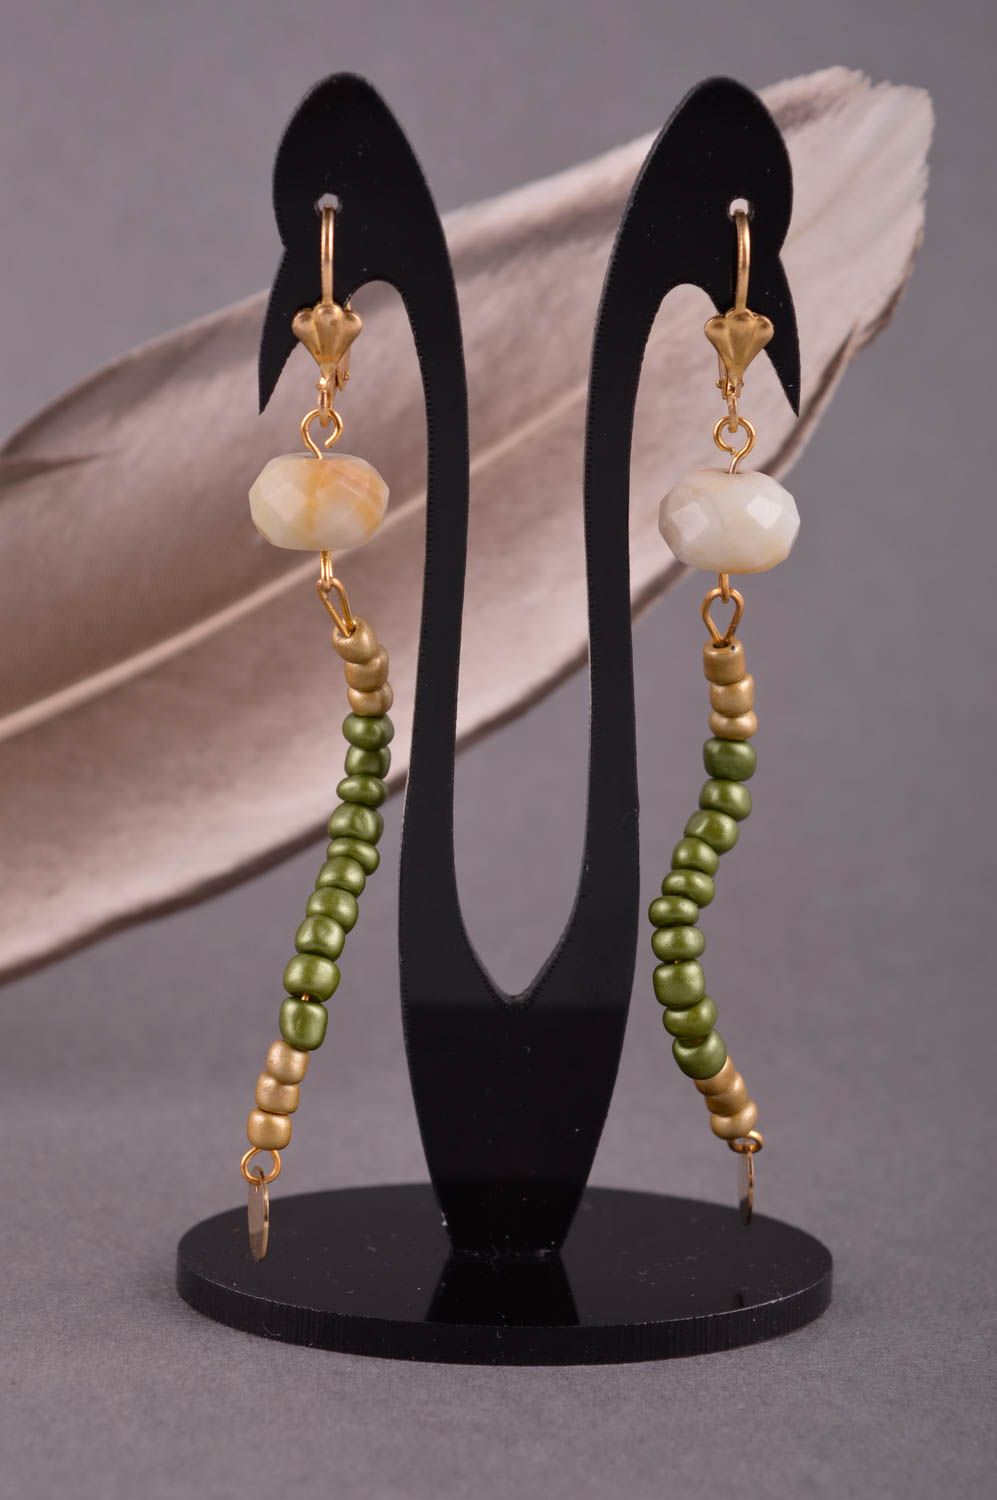 Handmade stylish earrings long earrings with charms beaded earrings for women photo 1